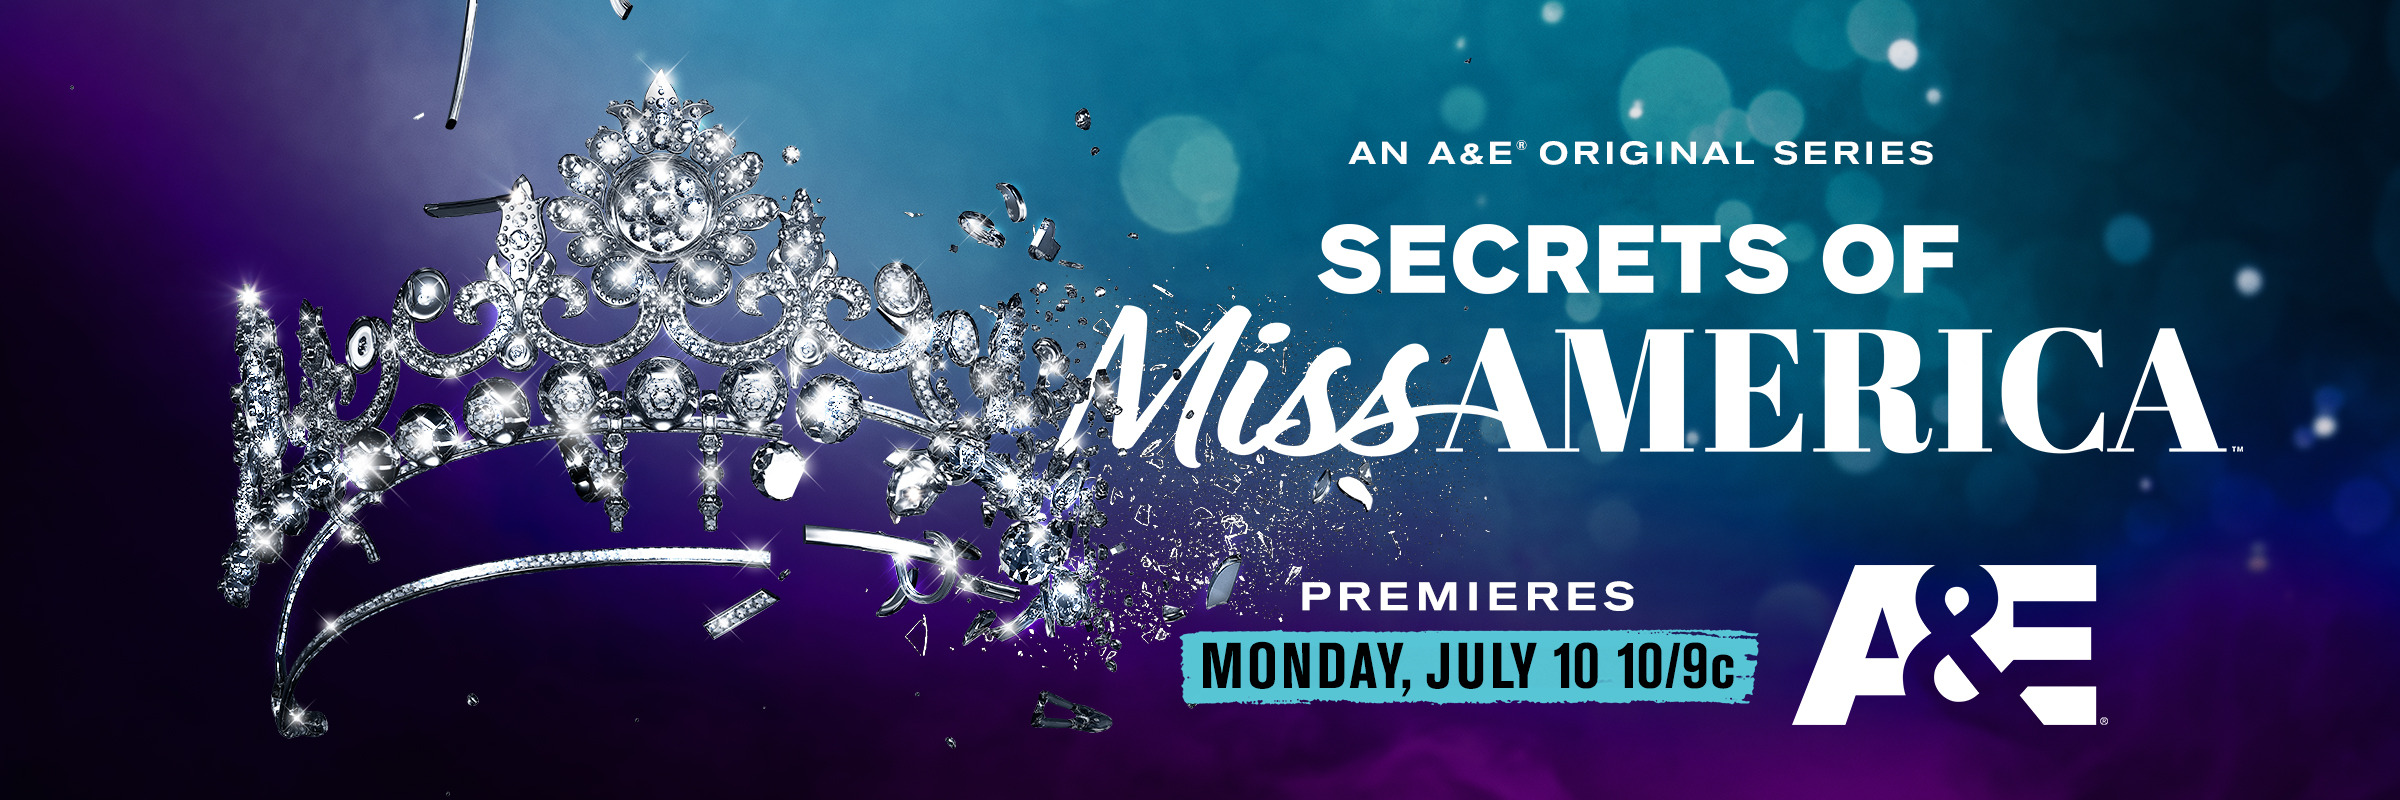 Mega Sized TV Poster Image for Secrets of Miss America (#2 of 2)